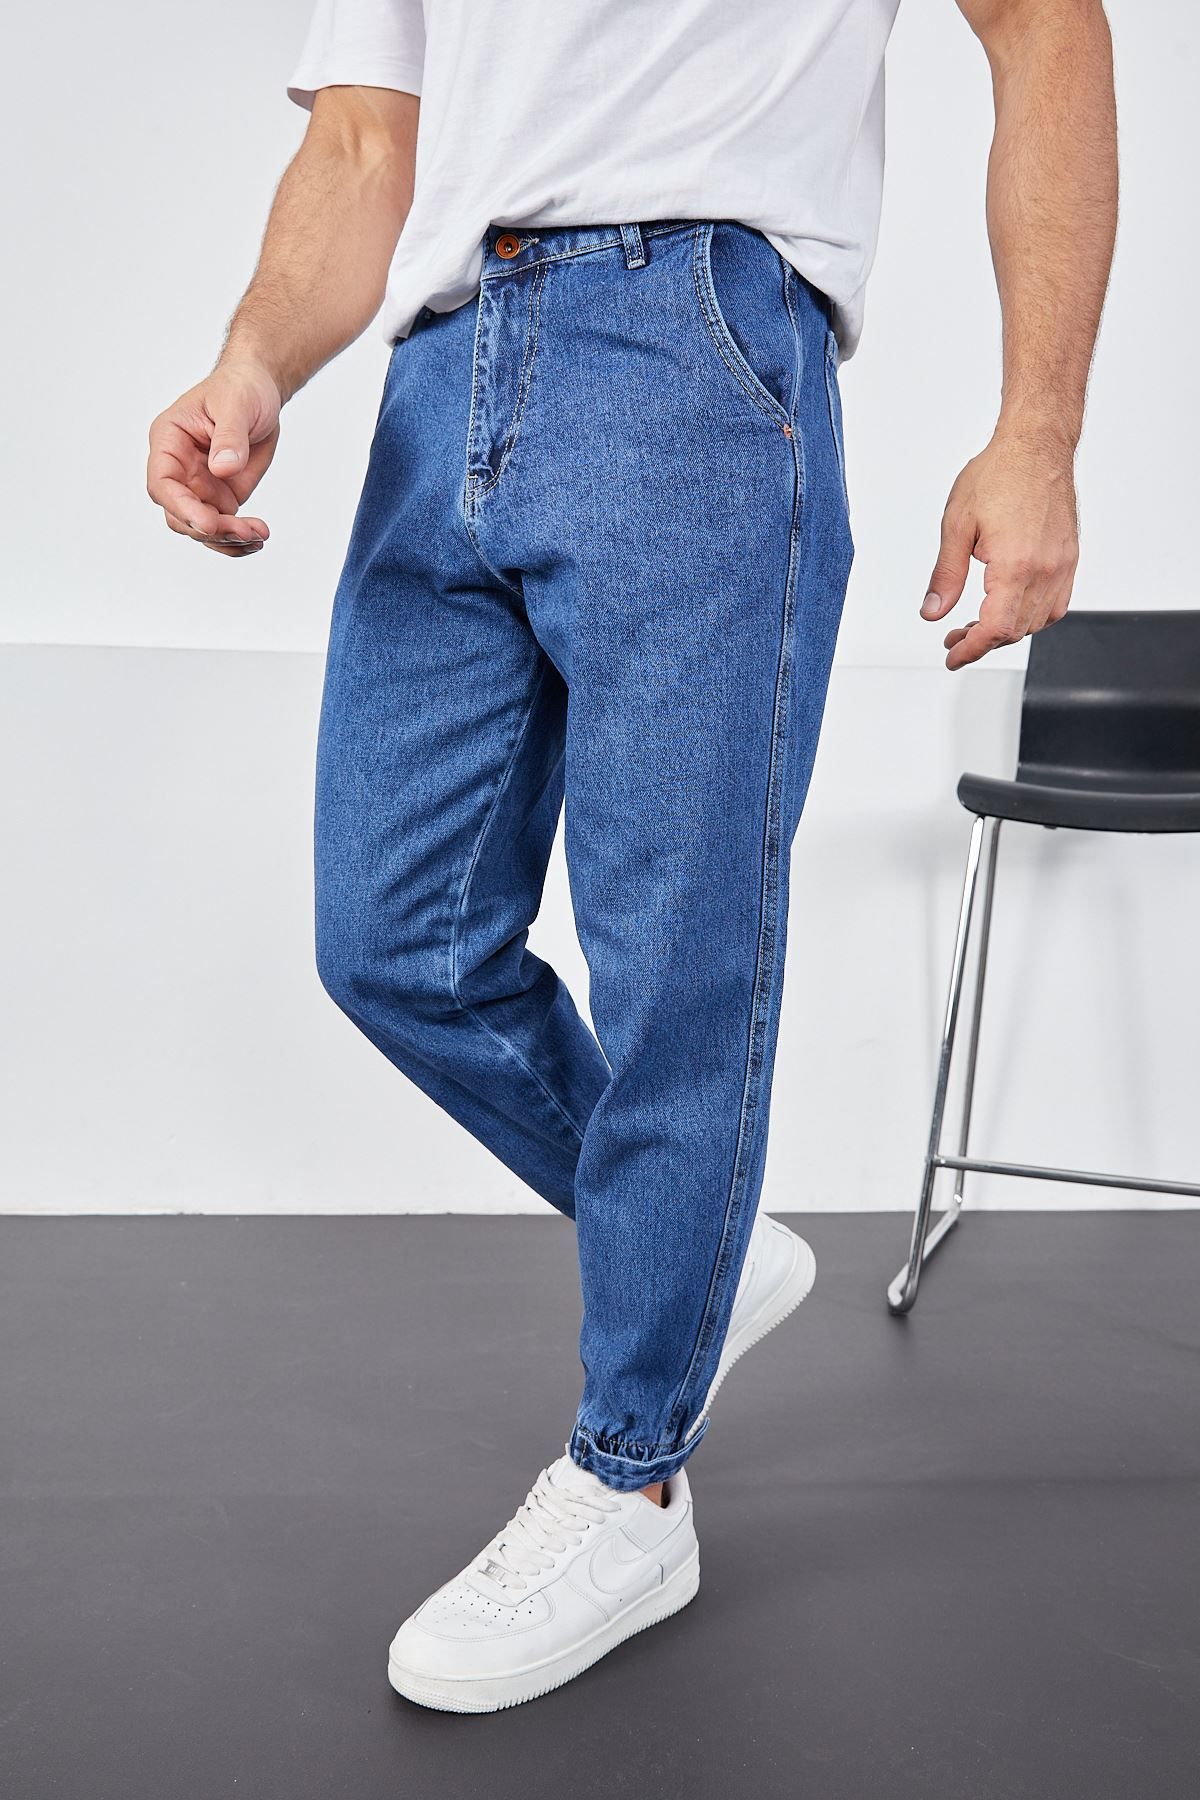 LTC Jeans Erkek Koyu Mavi Baggy Fit Rahat Kalıp Paçası Lastikli Ve Cırtlı Pantolon